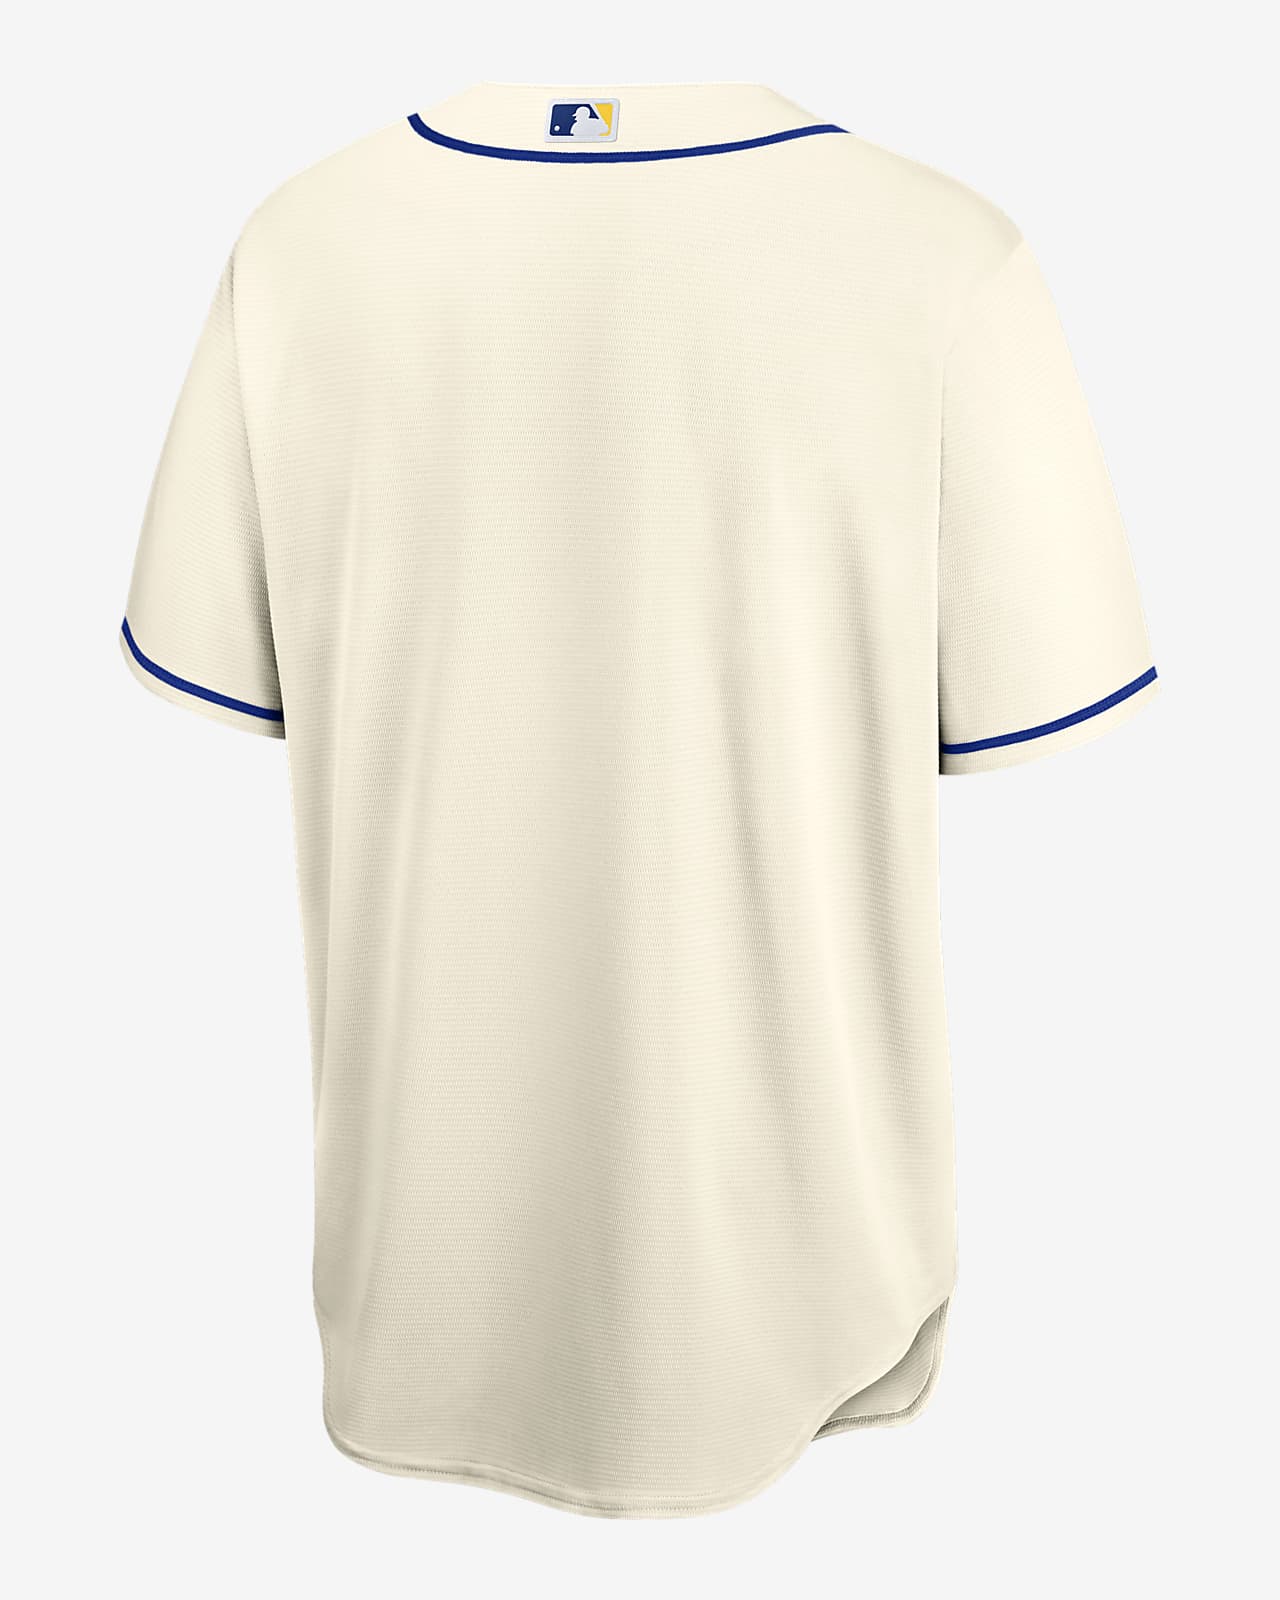 ⭐ Casaca MLB Seattle Mariners talle M⭐ 💲 VENDIDA 💲 #casaca #camiseta # seattle #mariners #baseball #MLB #ropaamericana #ropaurbana…